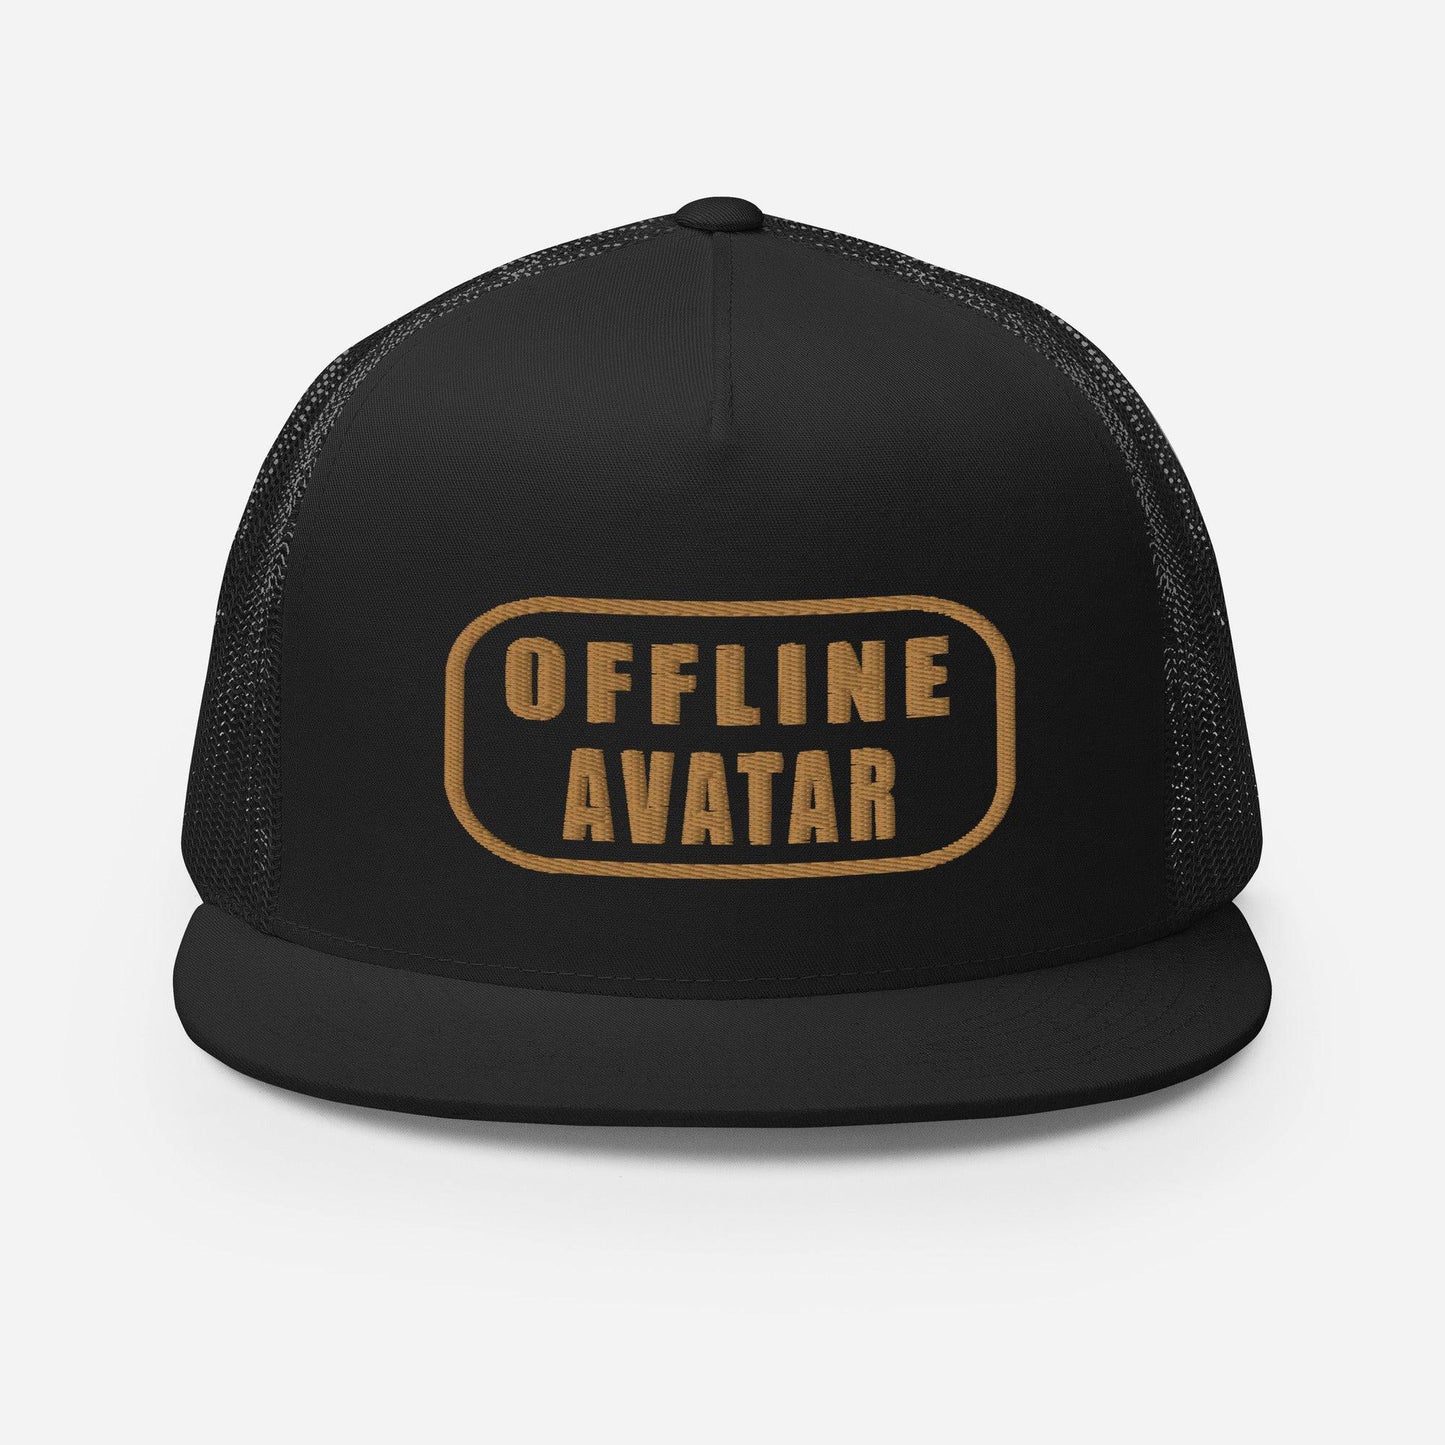 Offline Avatar - Classic Flat Bill Trucker Cap